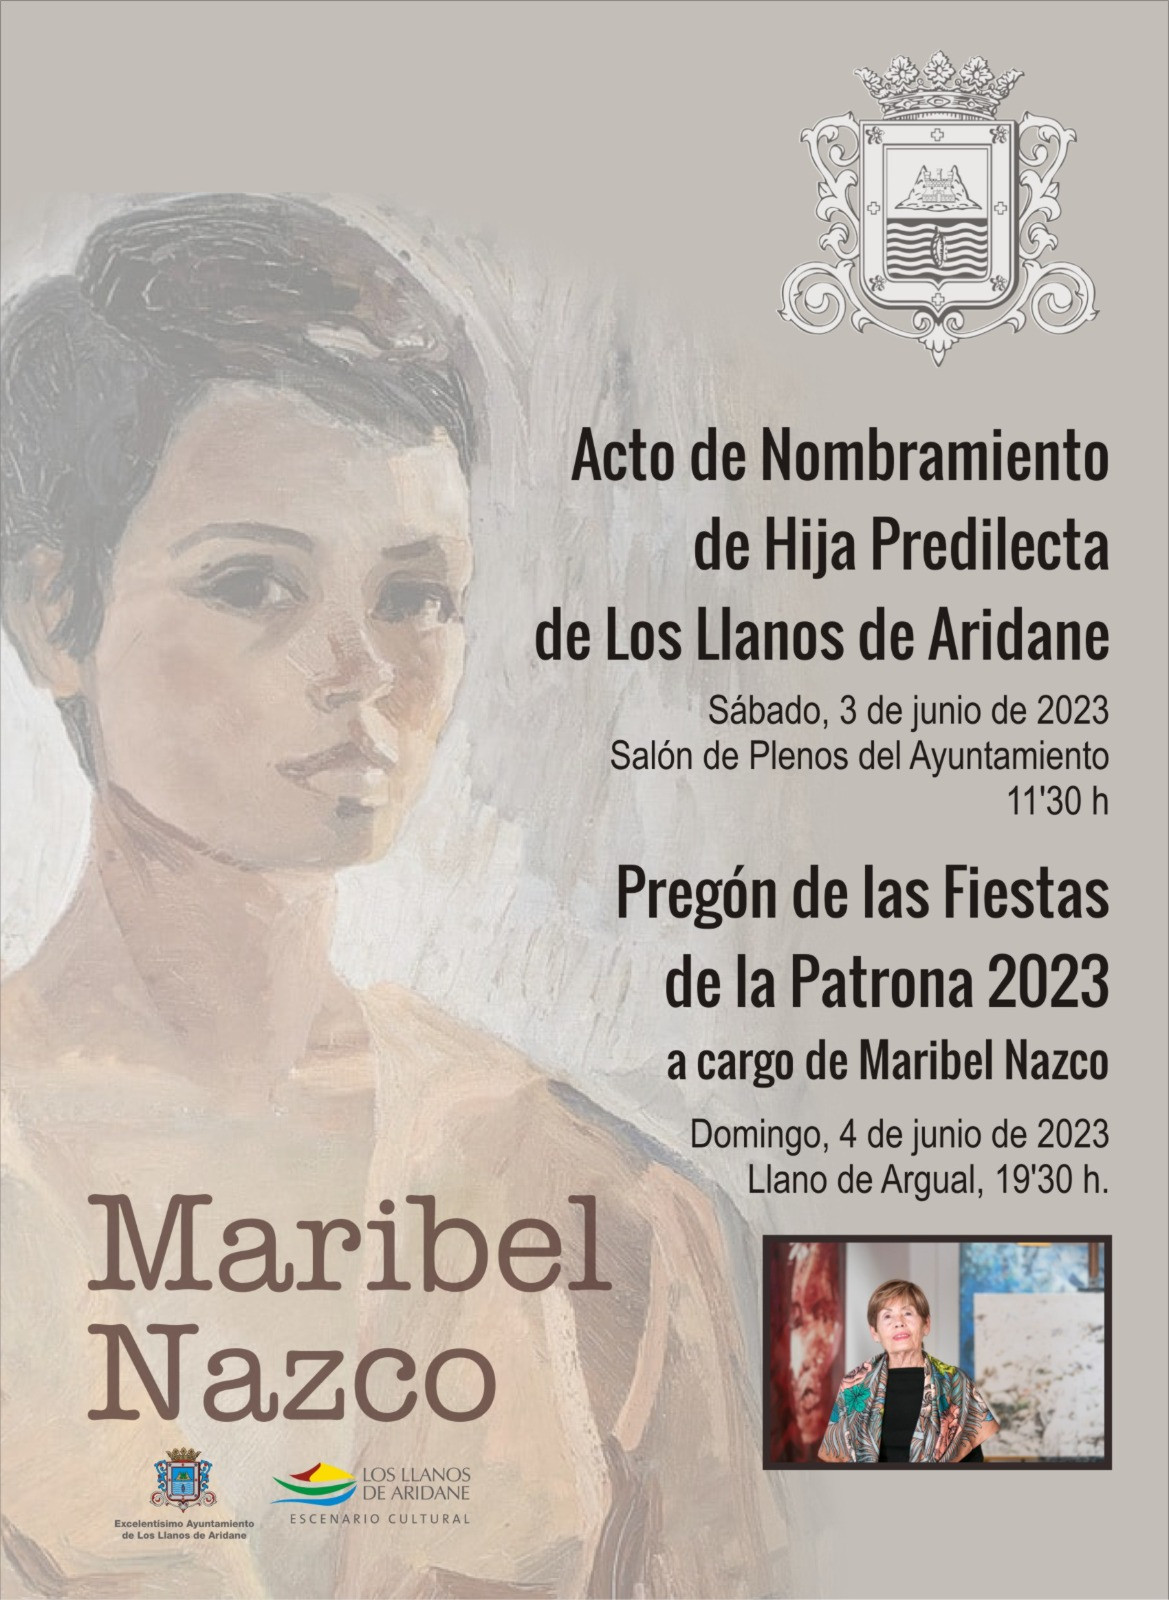 Maribel Nazco